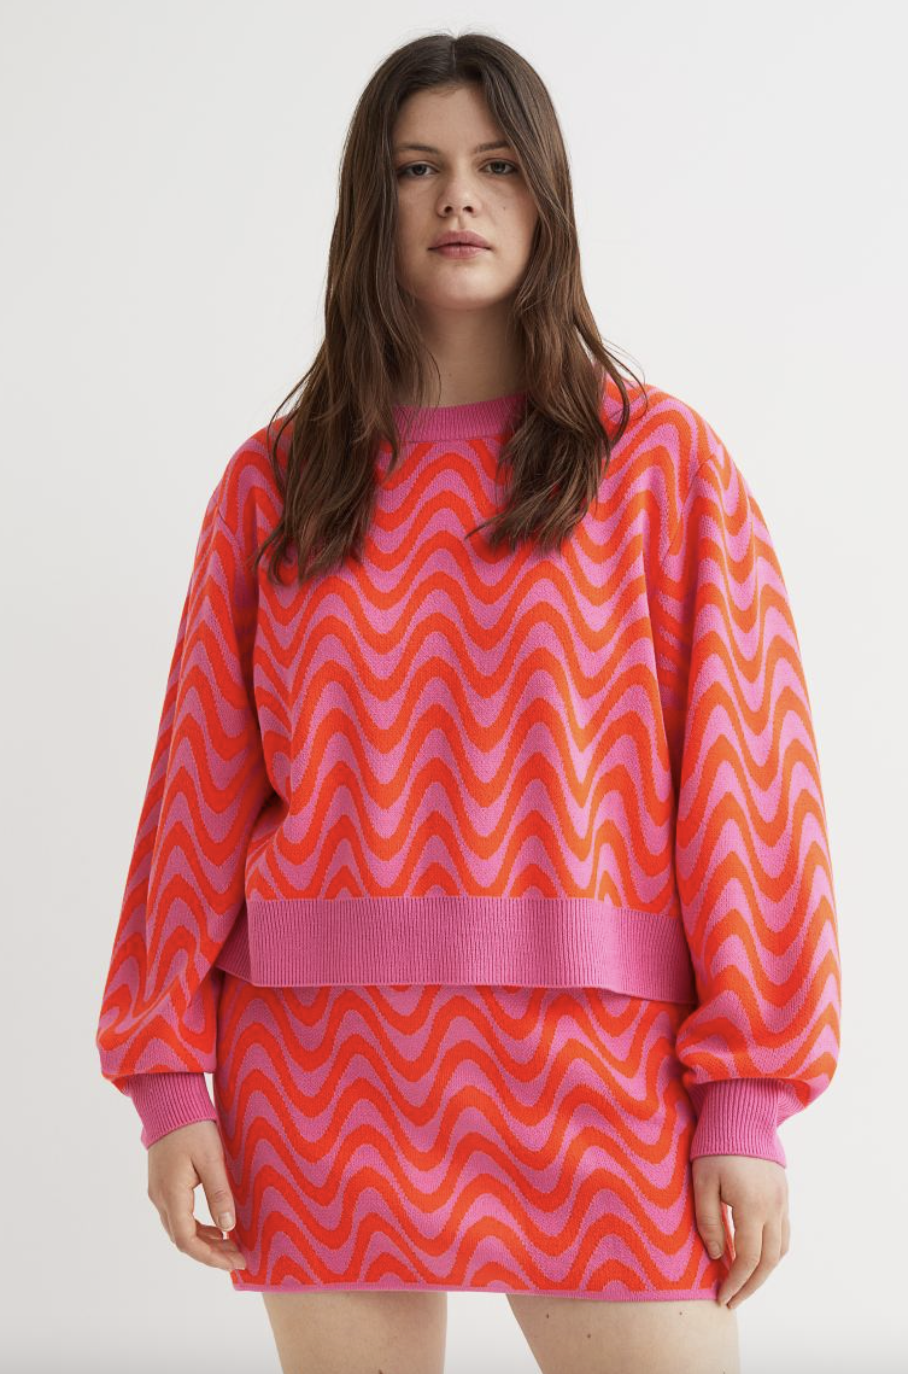 plus size model in pink and orange striped H&M+ Sweater (Photo via H&M)